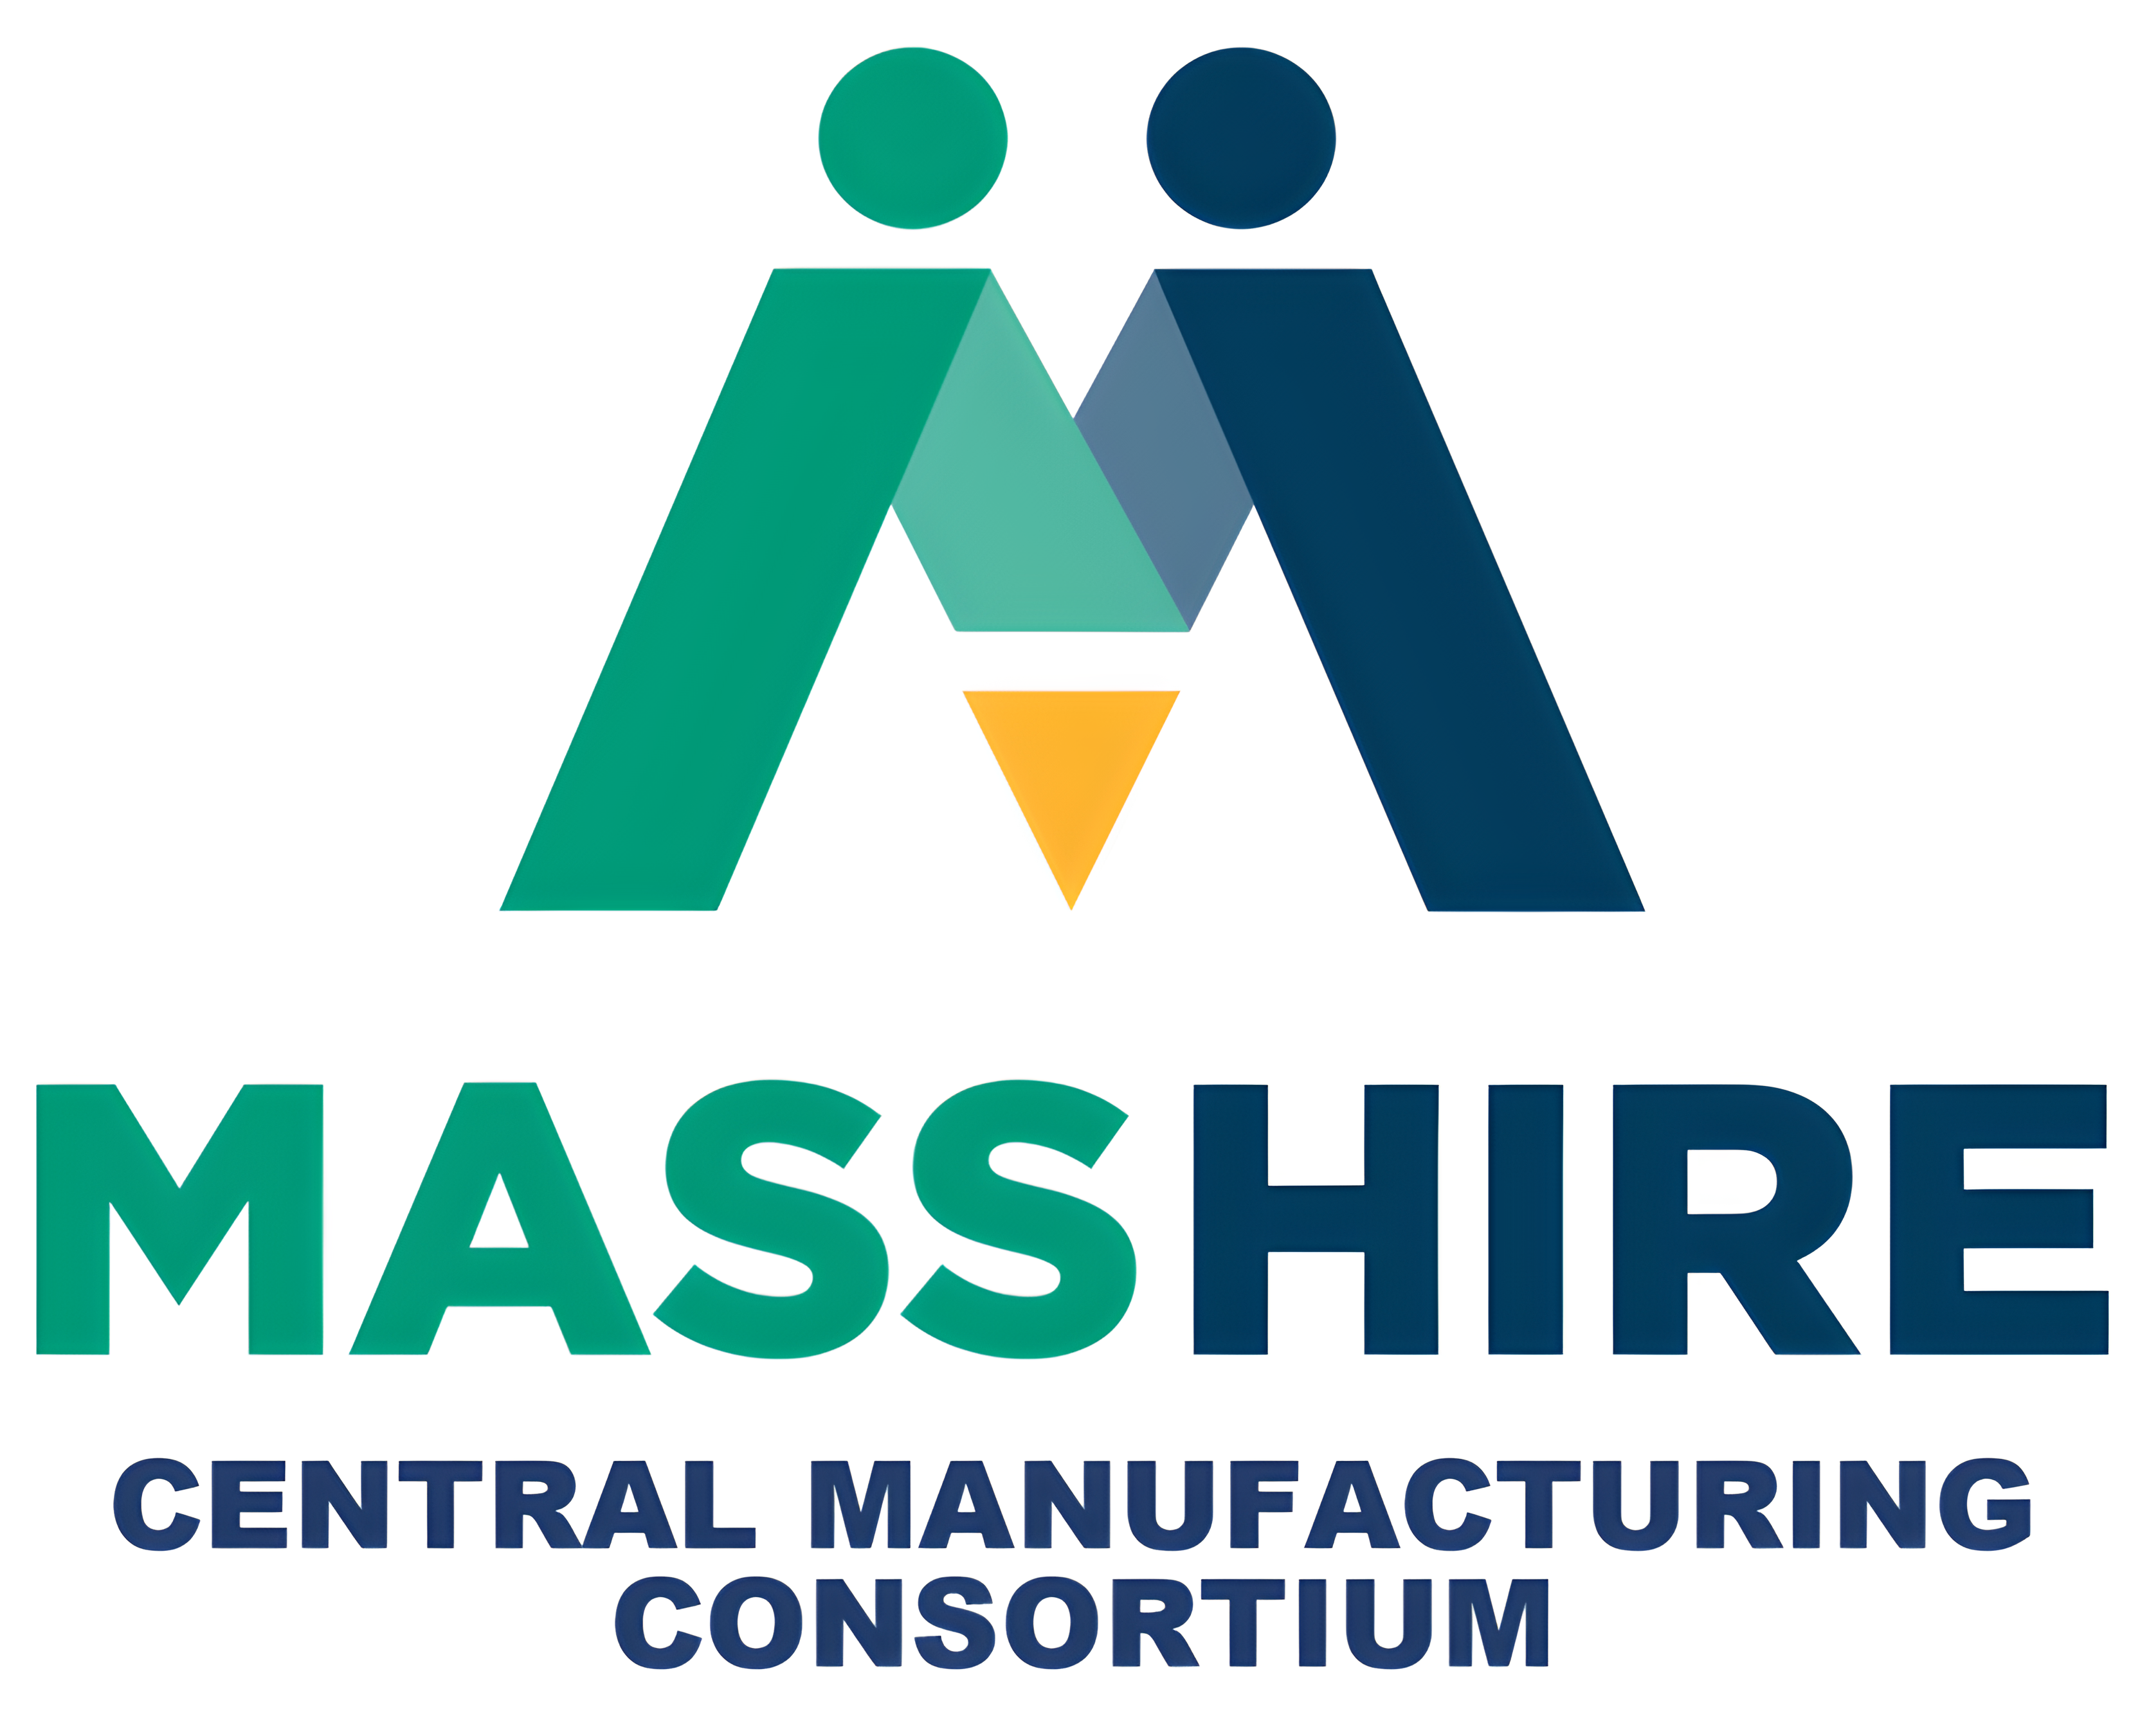 MassHire – Central Manufacturing Consortium